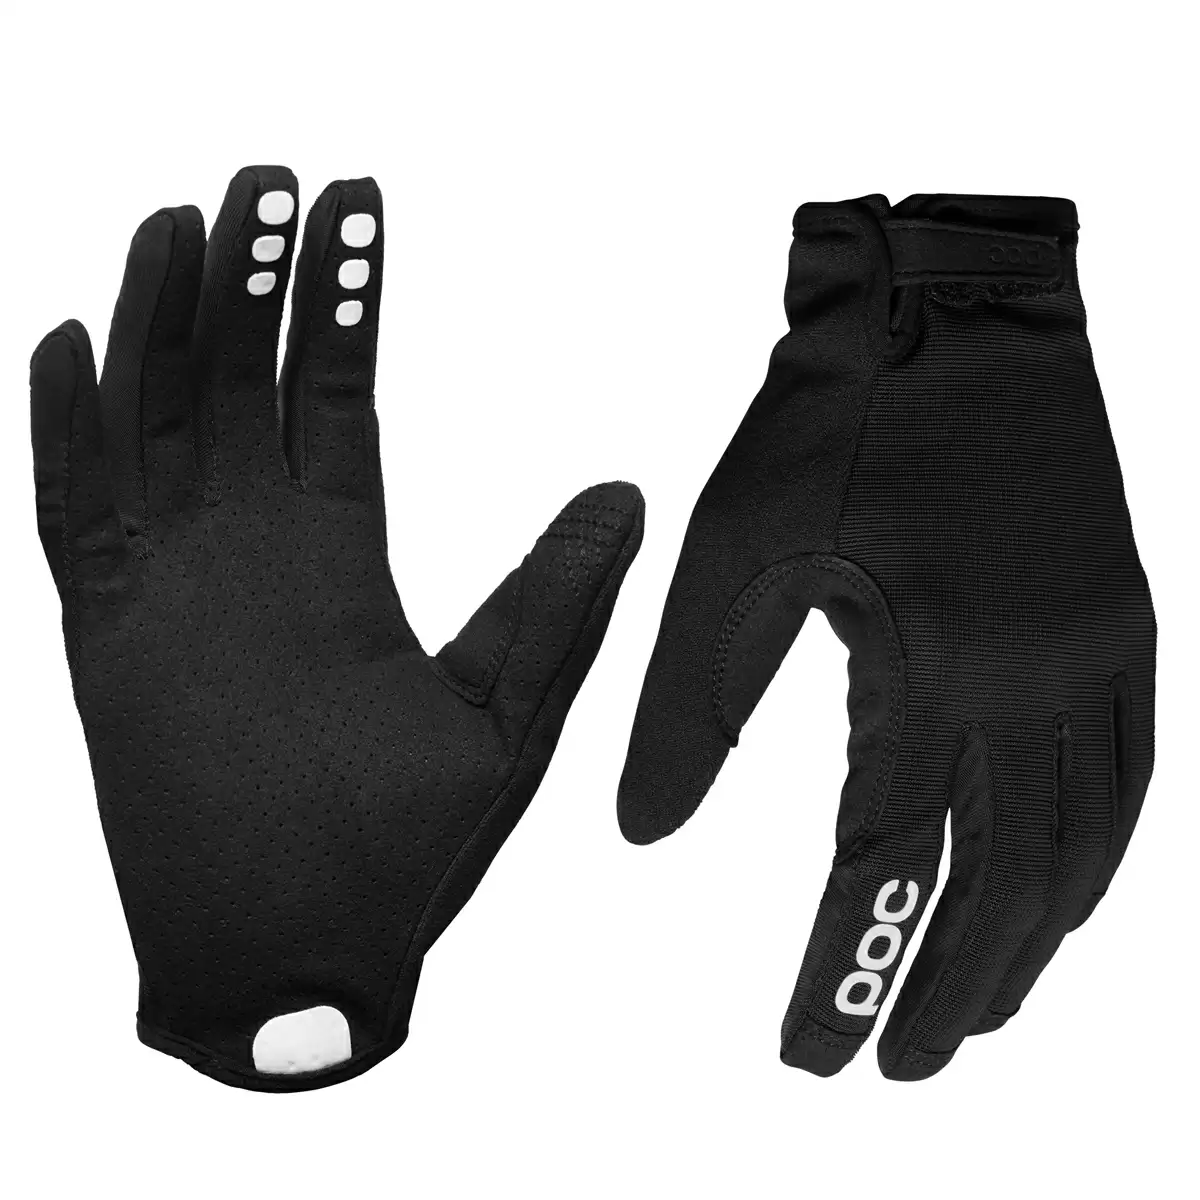 Resistance Enduro Adj Glove Black Size M - image